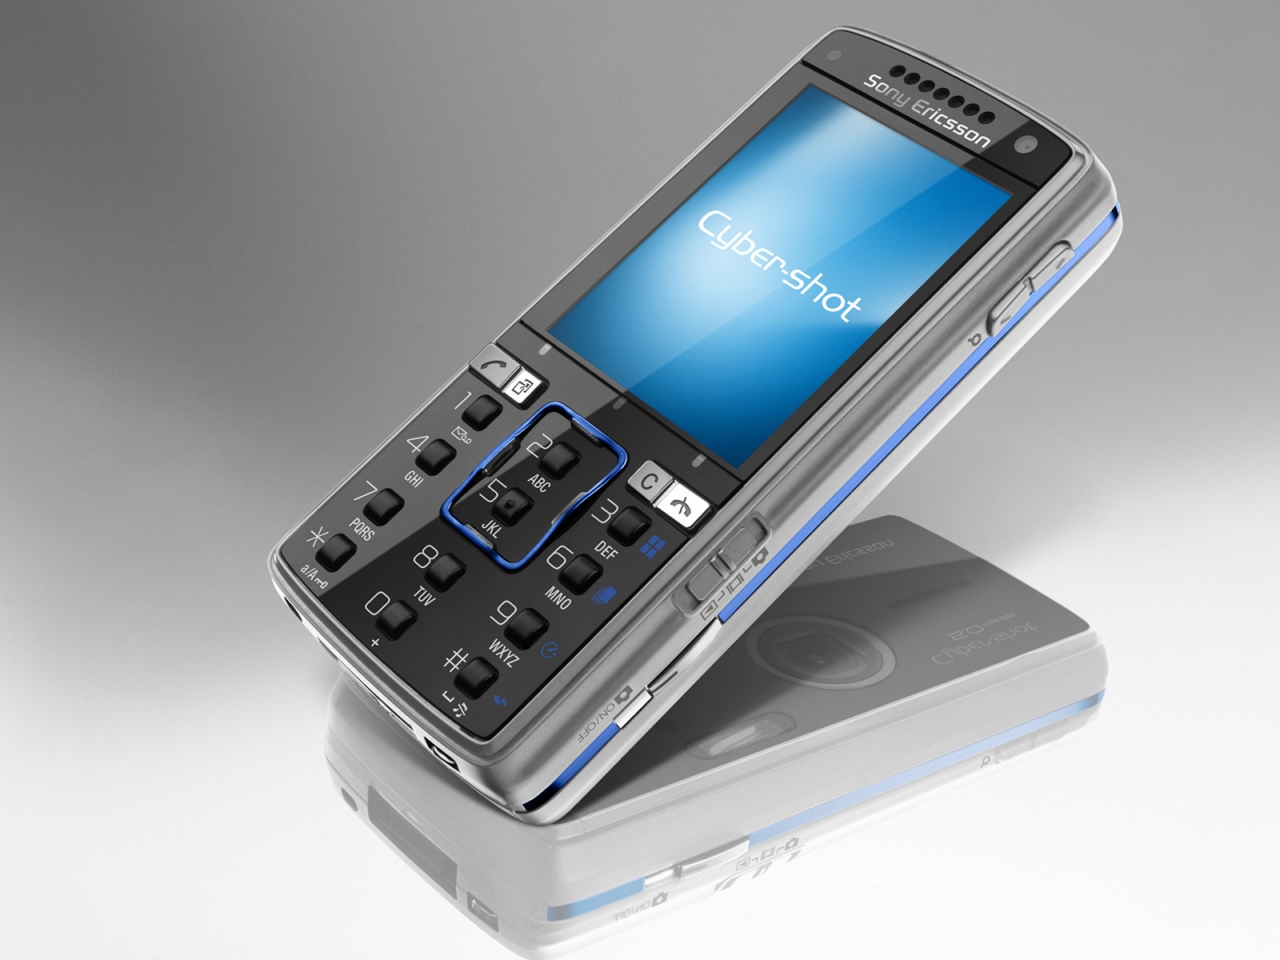 Sony Ericsson K850 for 1280 x 960 resolution